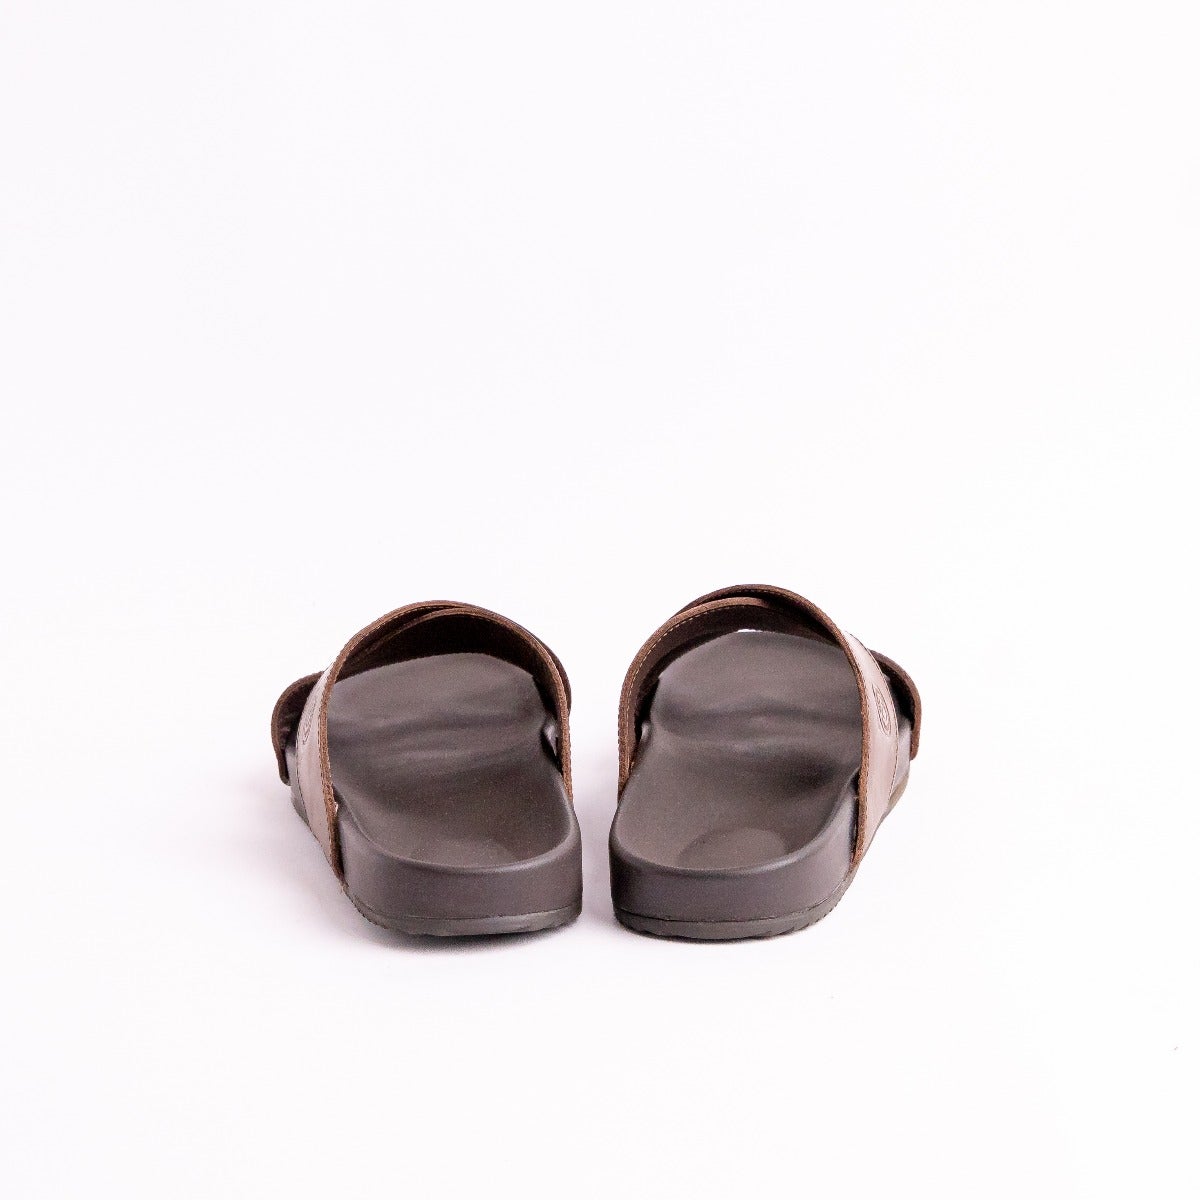 Genuine leather sandals for ladies amazon - Arad Branding